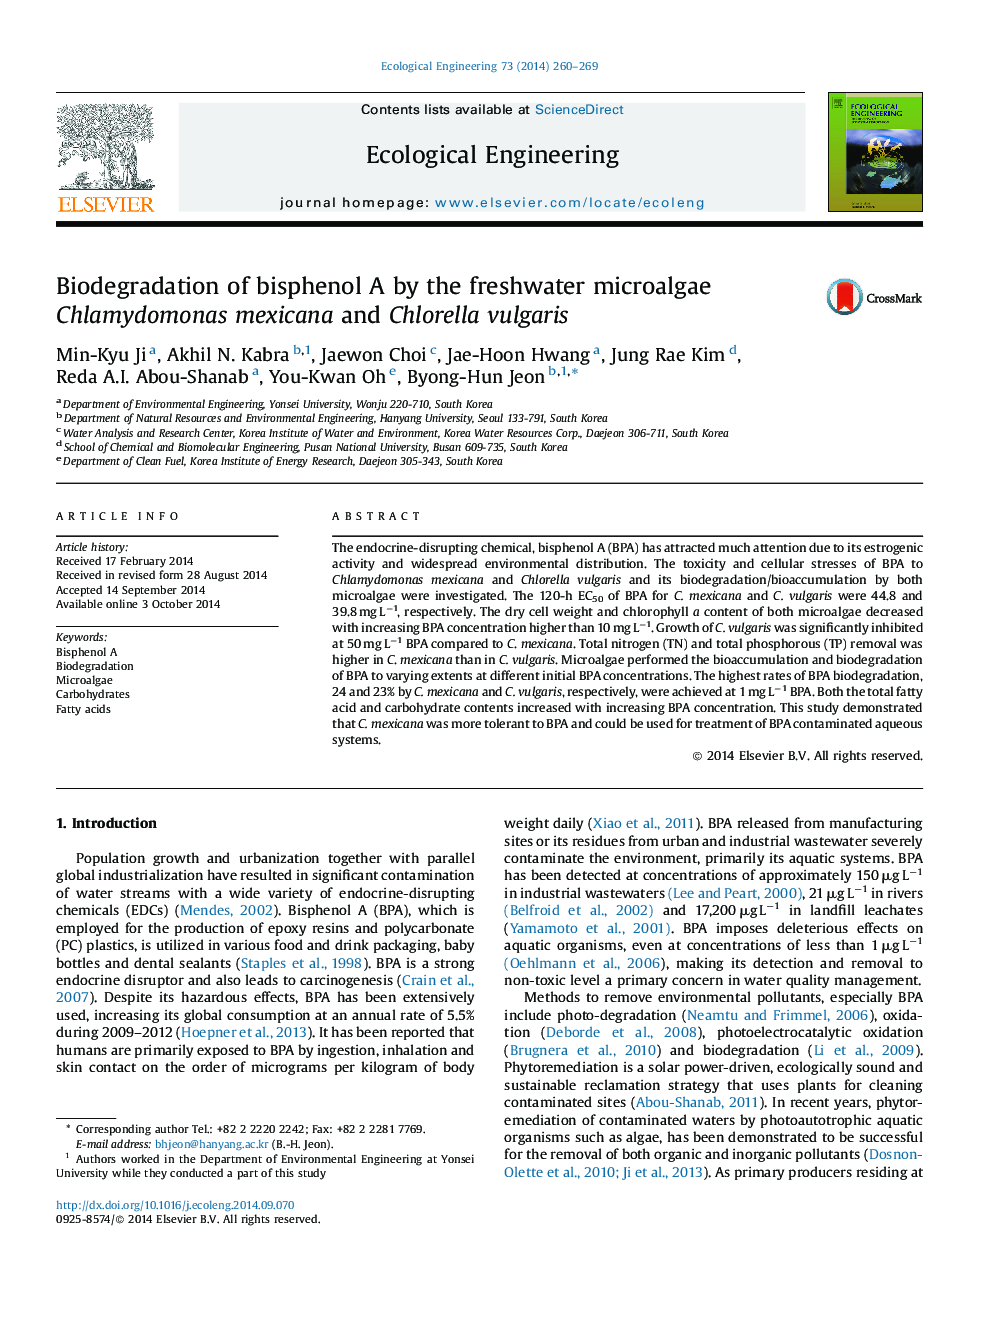 Biodegradation of bisphenol A by the freshwater microalgae Chlamydomonas mexicana and Chlorella vulgaris